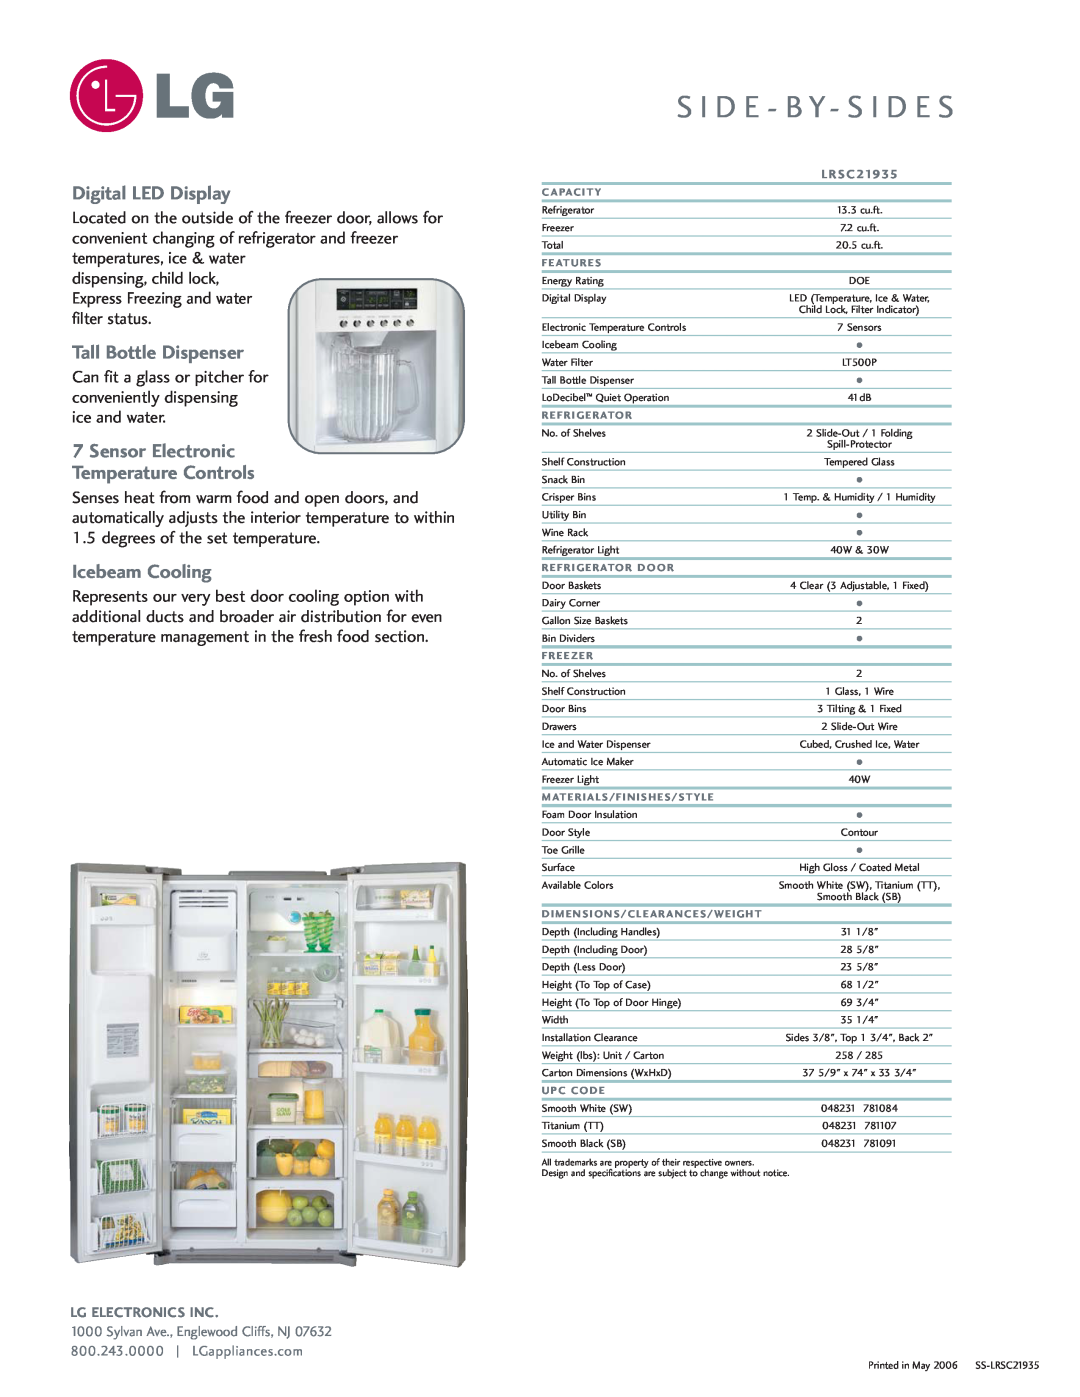 LG Electronics LRSC21935 manual Digital LED Display, Tall Bottle Dispenser, Sensor Electronic Temperature Controls 